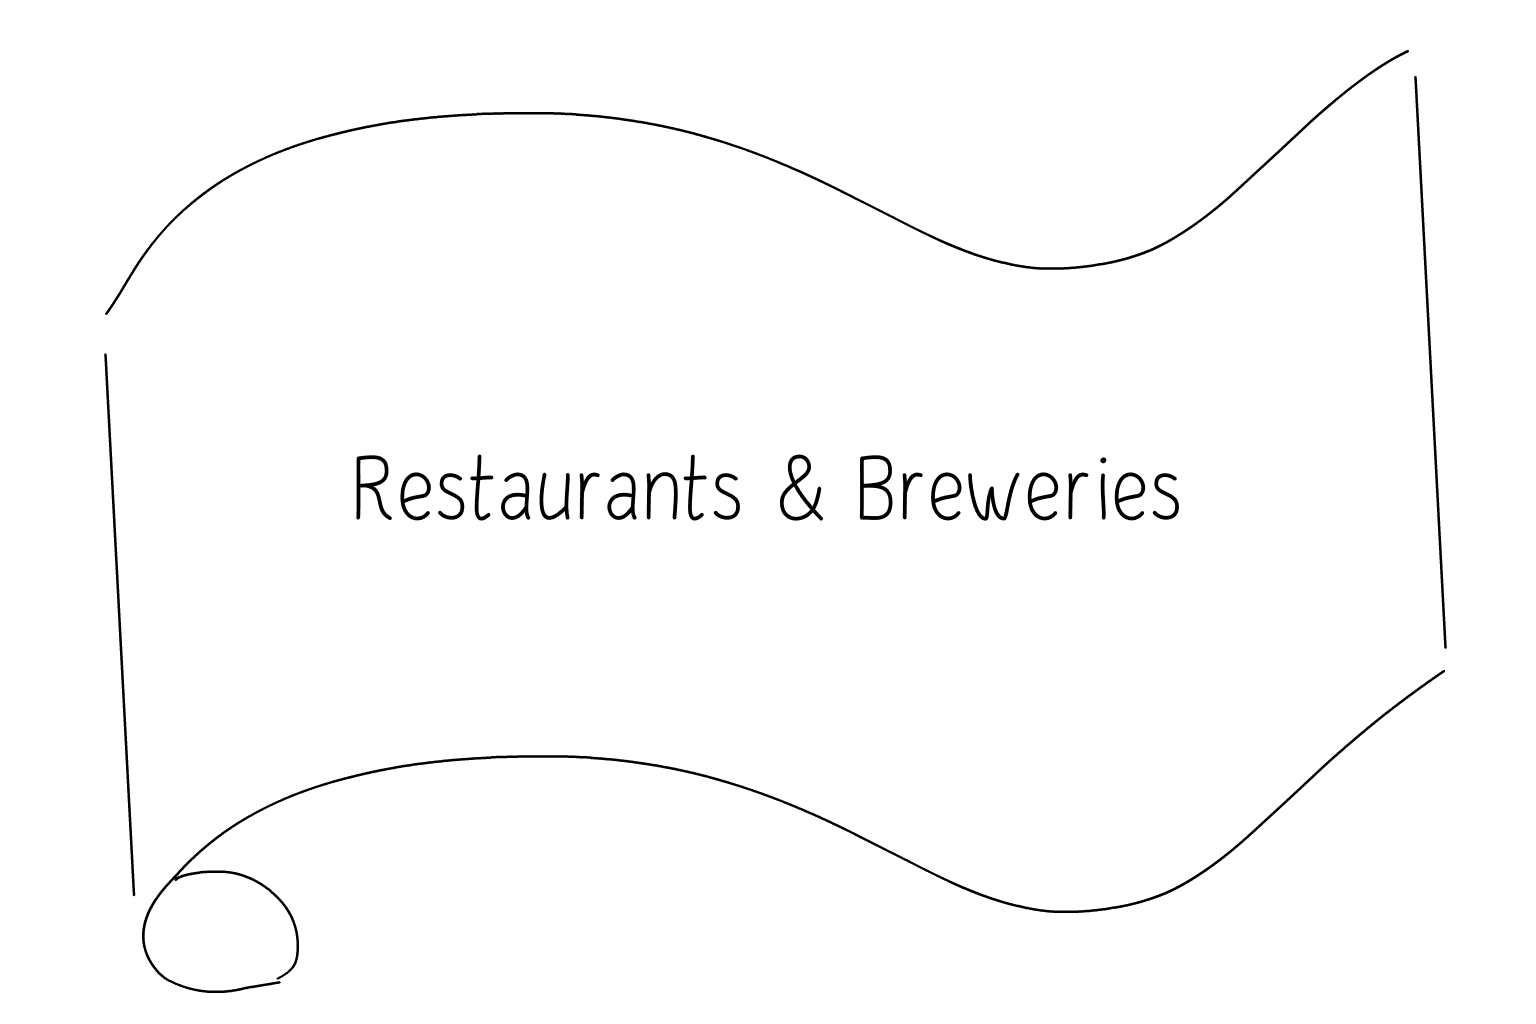 Illustration of Restaurants & Breweries